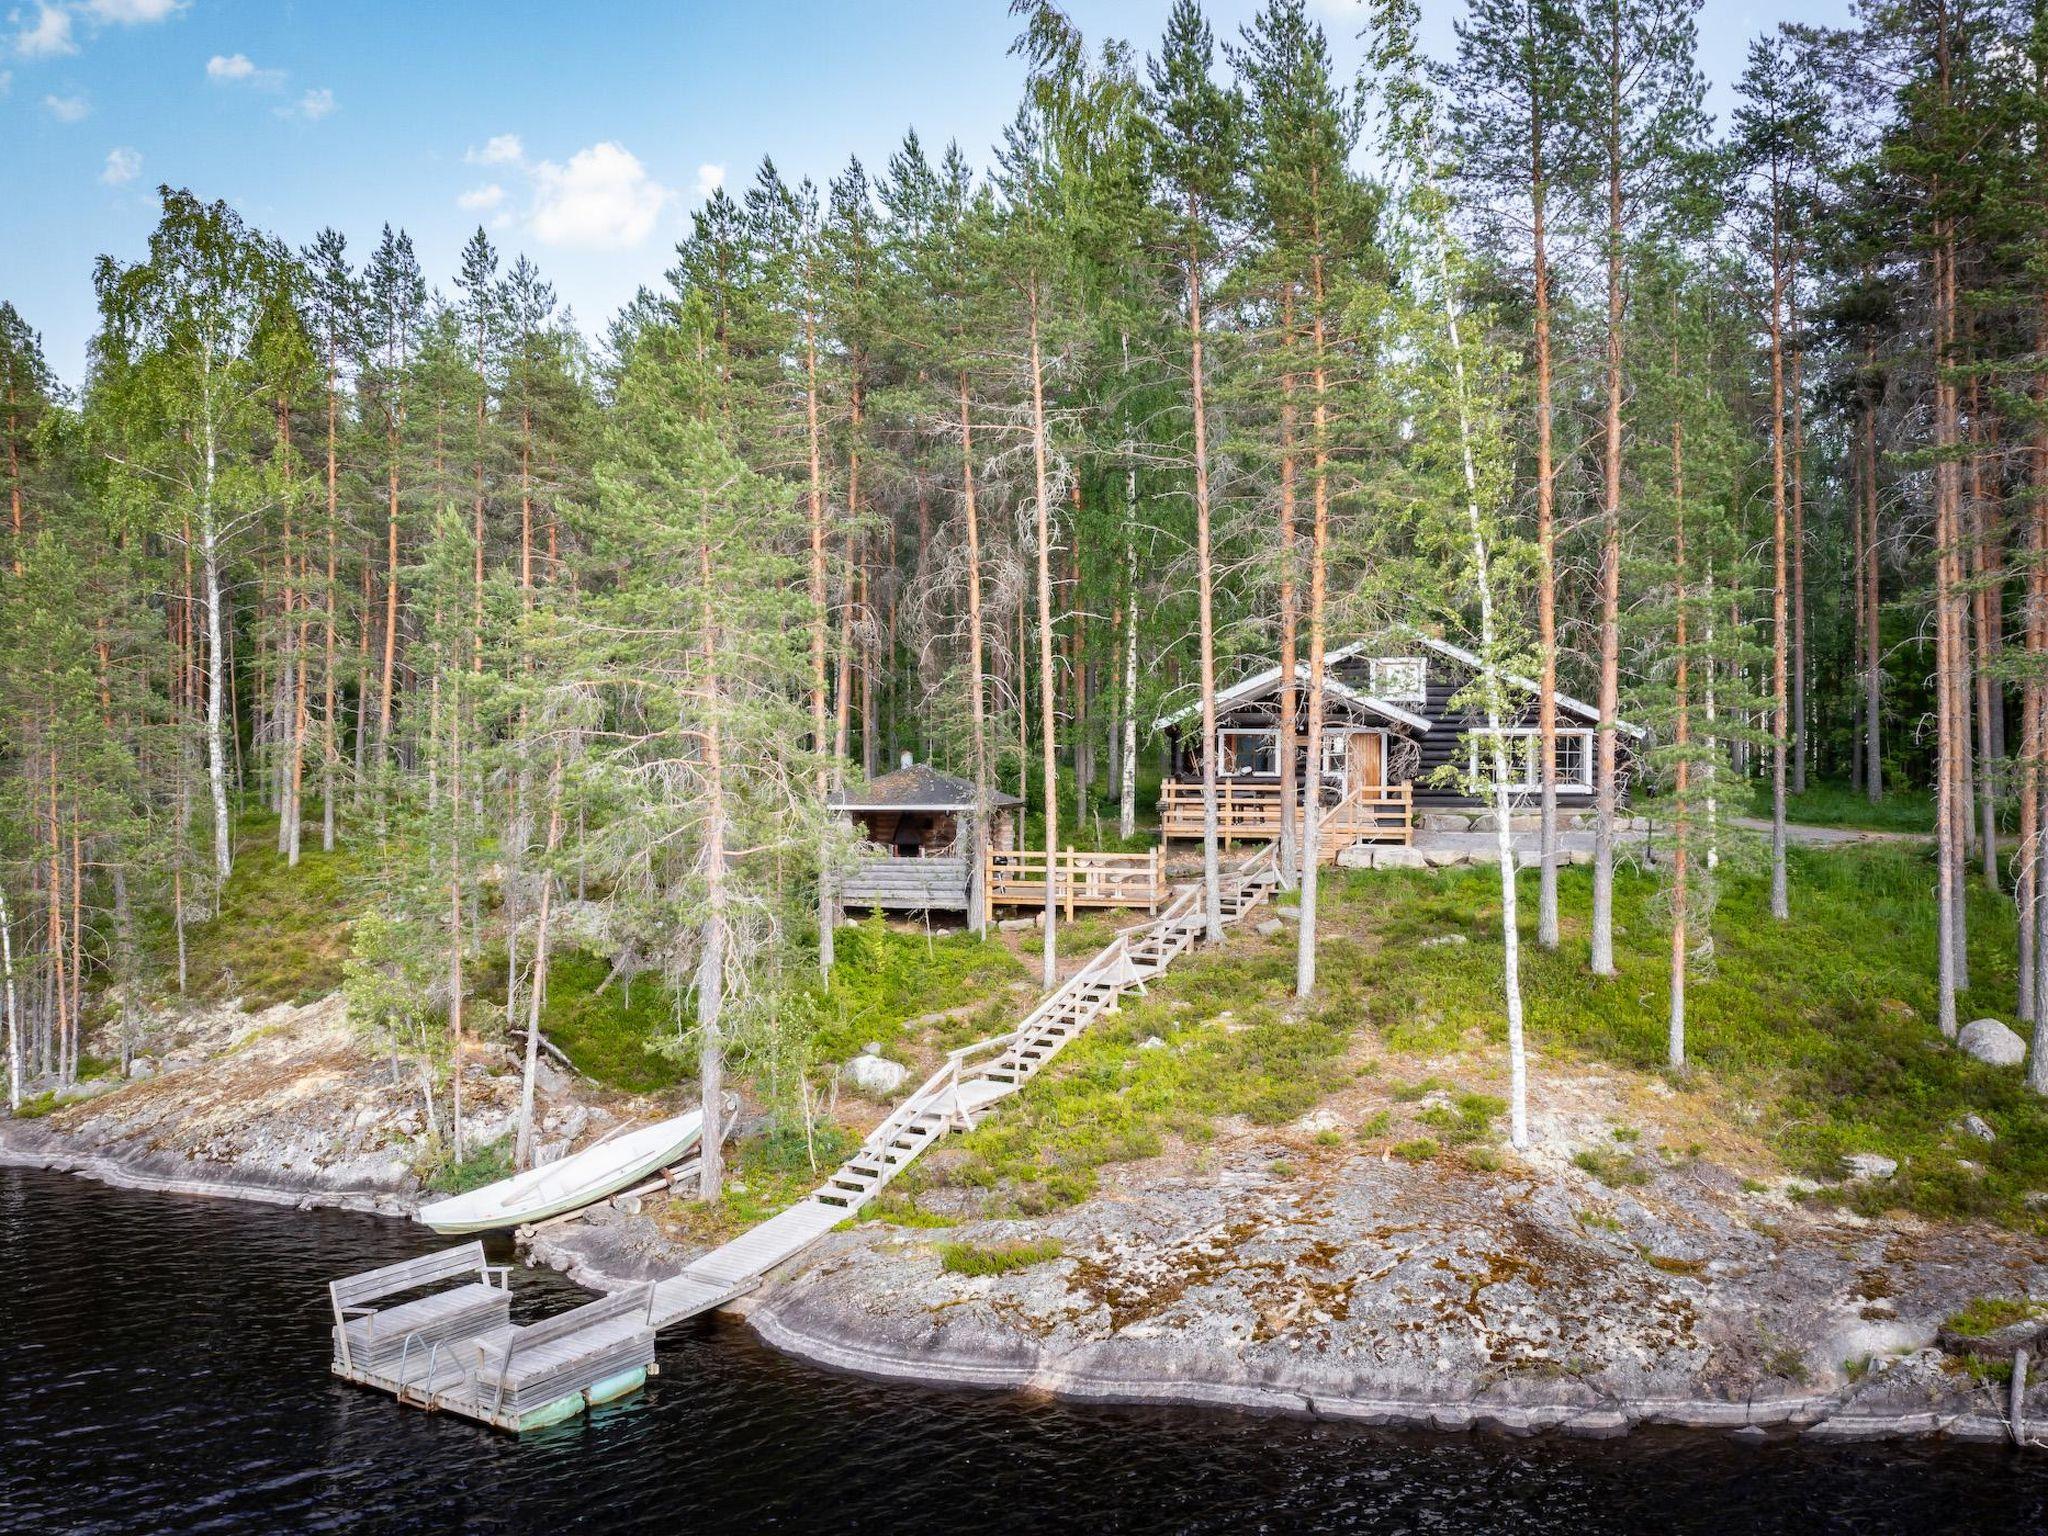 Photo 1 - 2 bedroom House in Mikkeli with sauna